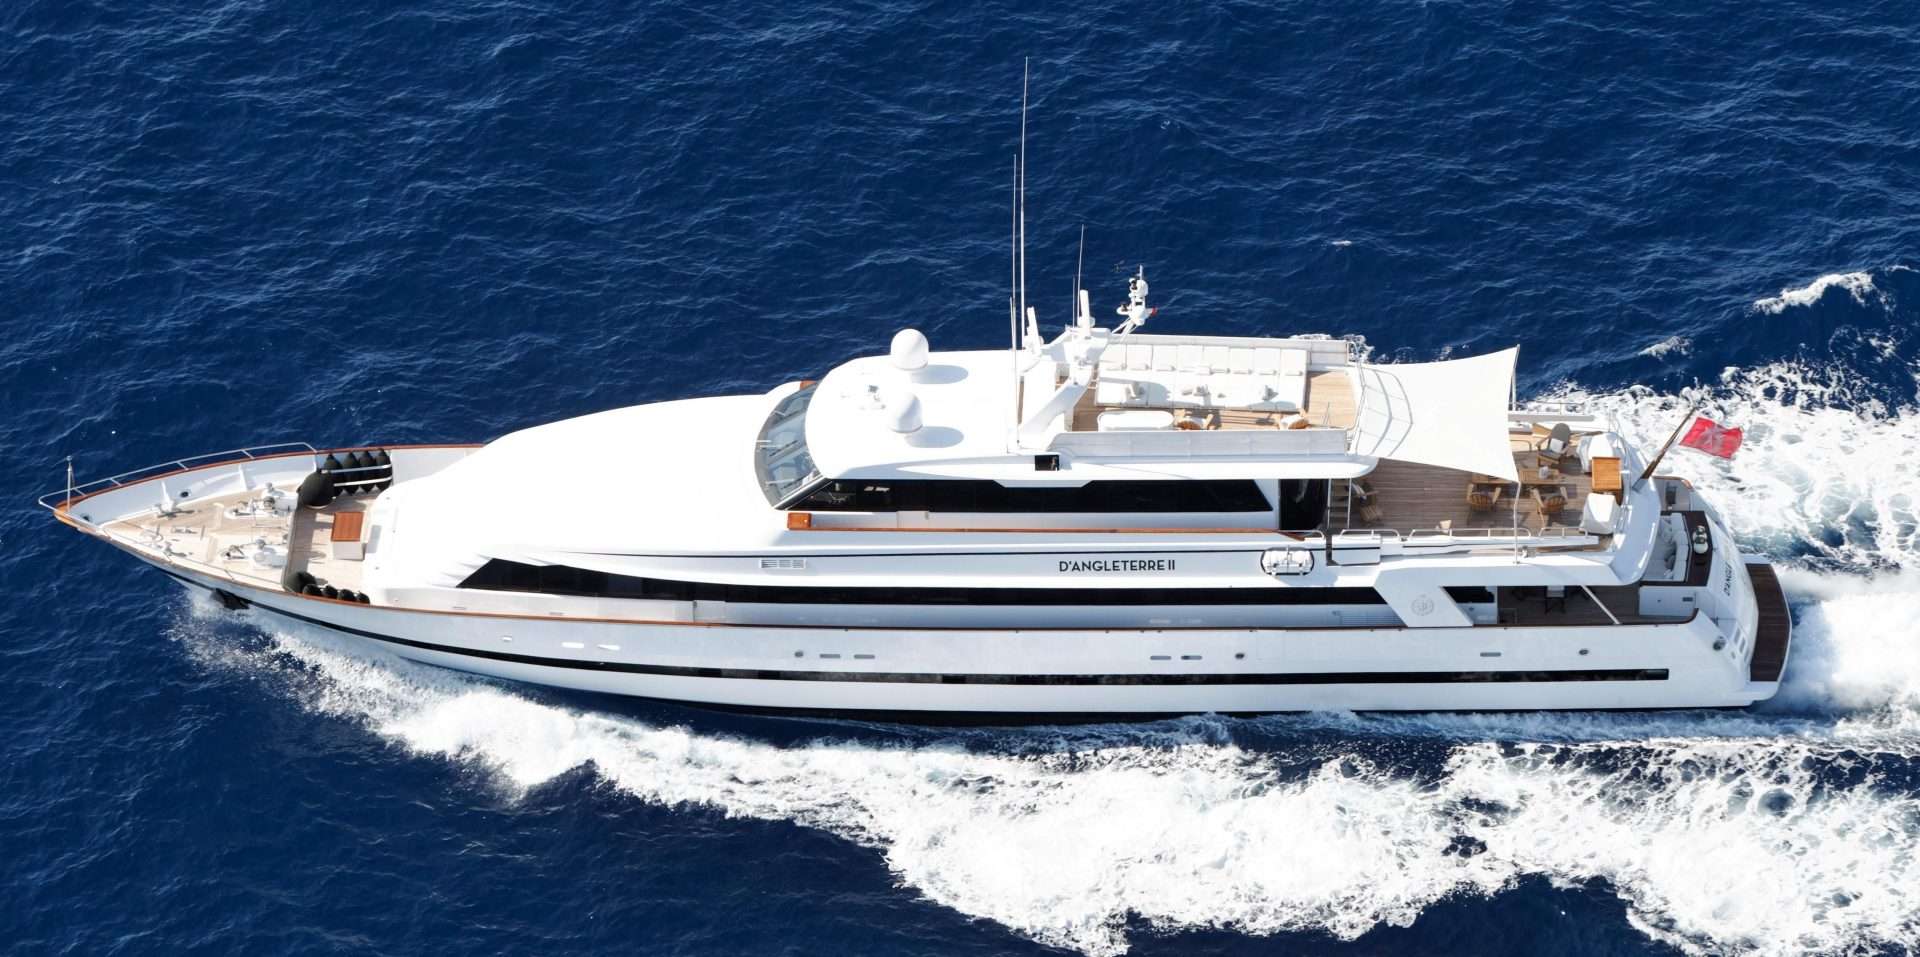 SEA LADY II - Yacht Charter Radazul & Boat hire in W. Med -Naples/Sicily, W. Med -Riviera/Cors/Sard., W. Med - Spain/Balearics 1